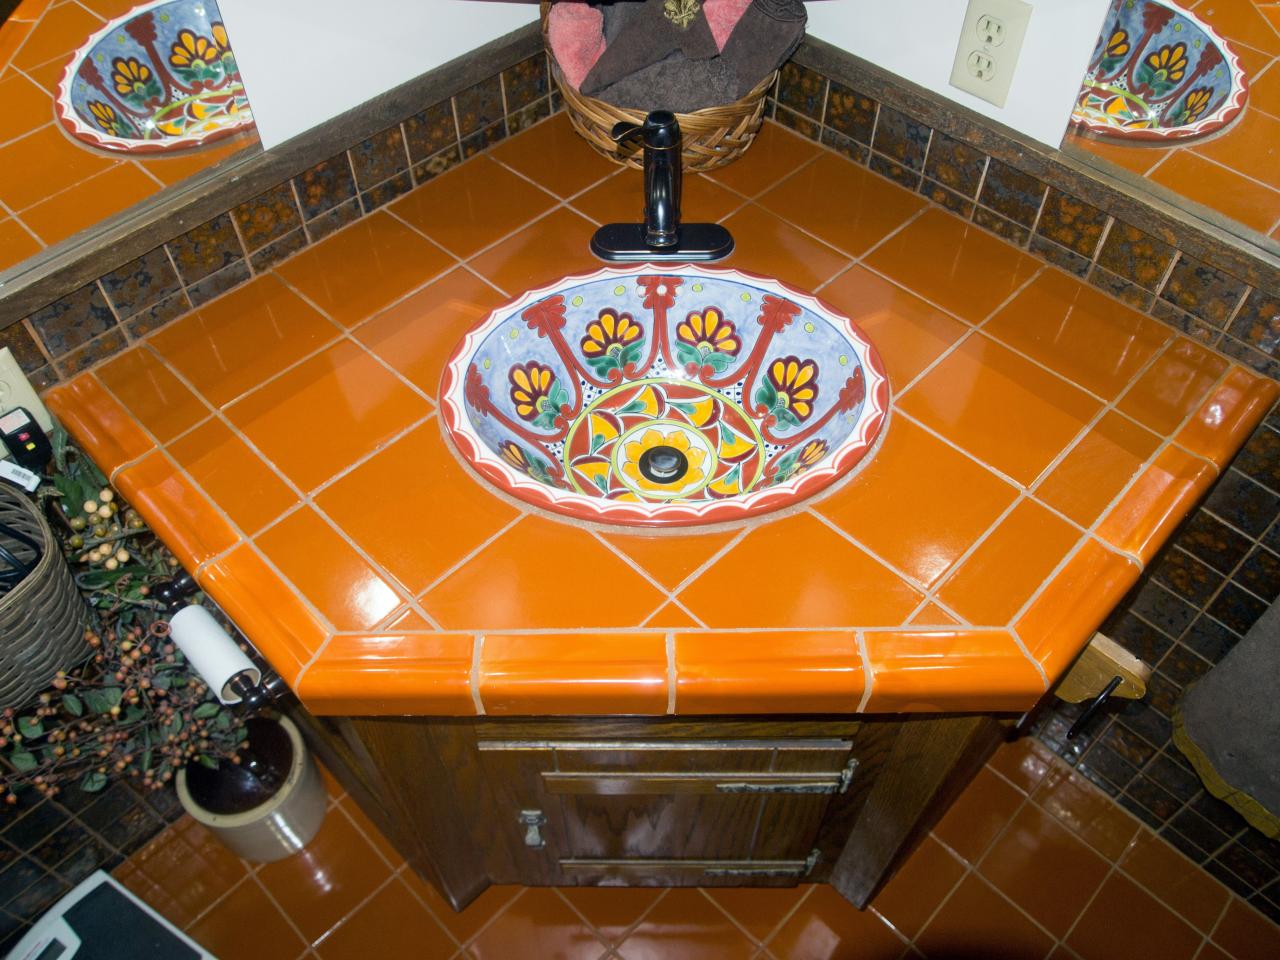 Mexican sink installation in the bathroom. Mexican tile bathroom